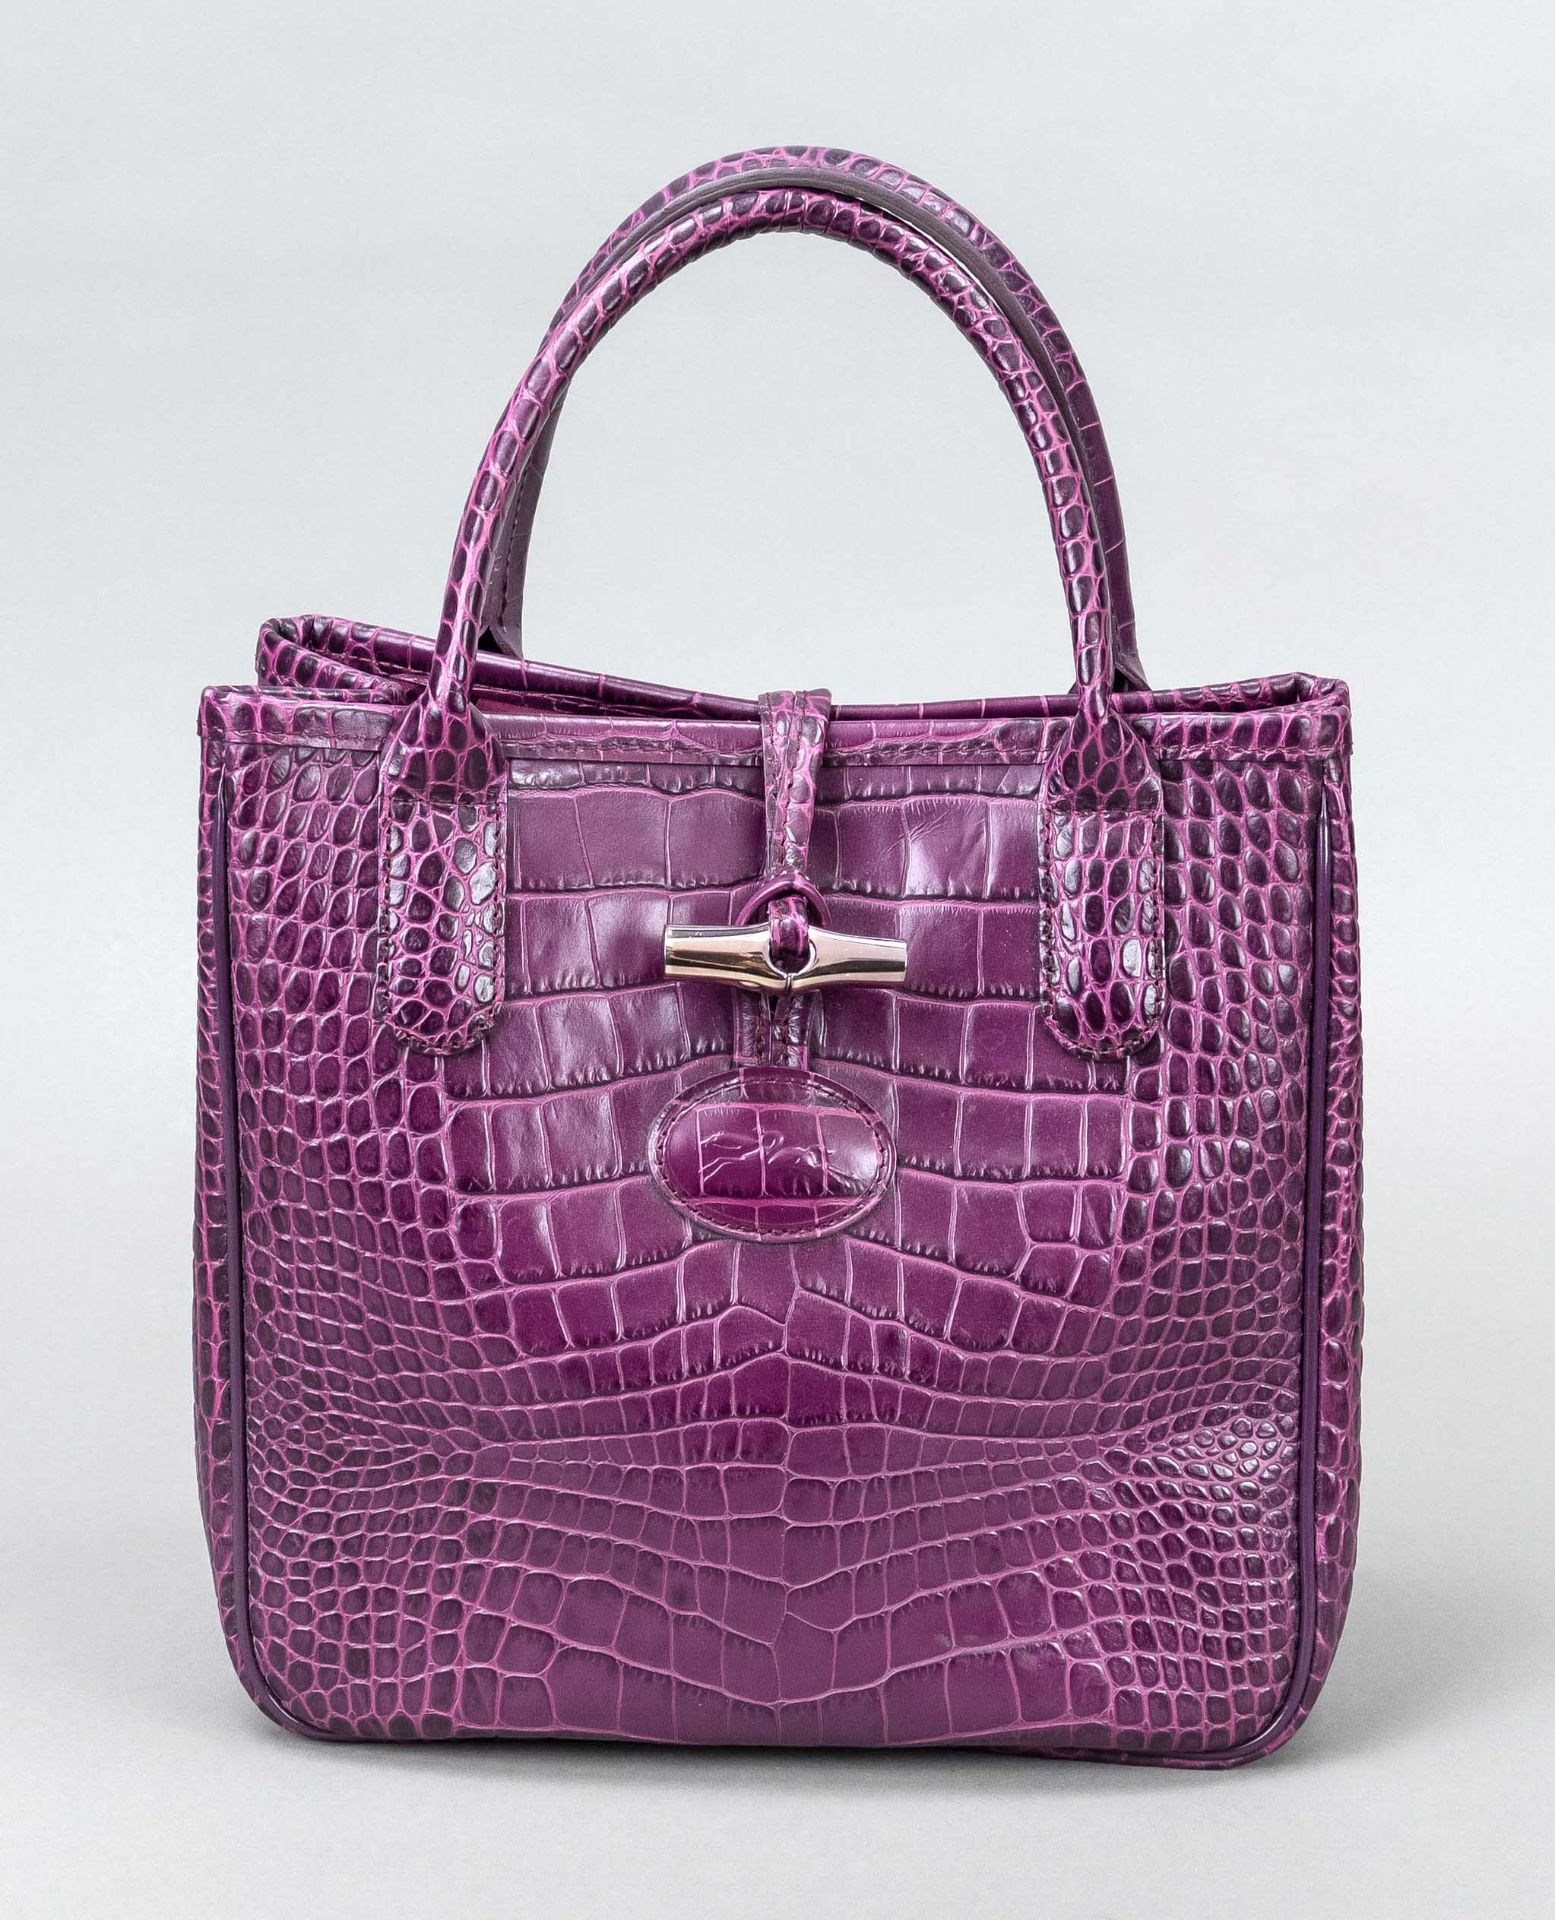 Longchamp, Small Vintage Shoulder Bag, aubergine-colored calfskin with crocodile embossing, gold-